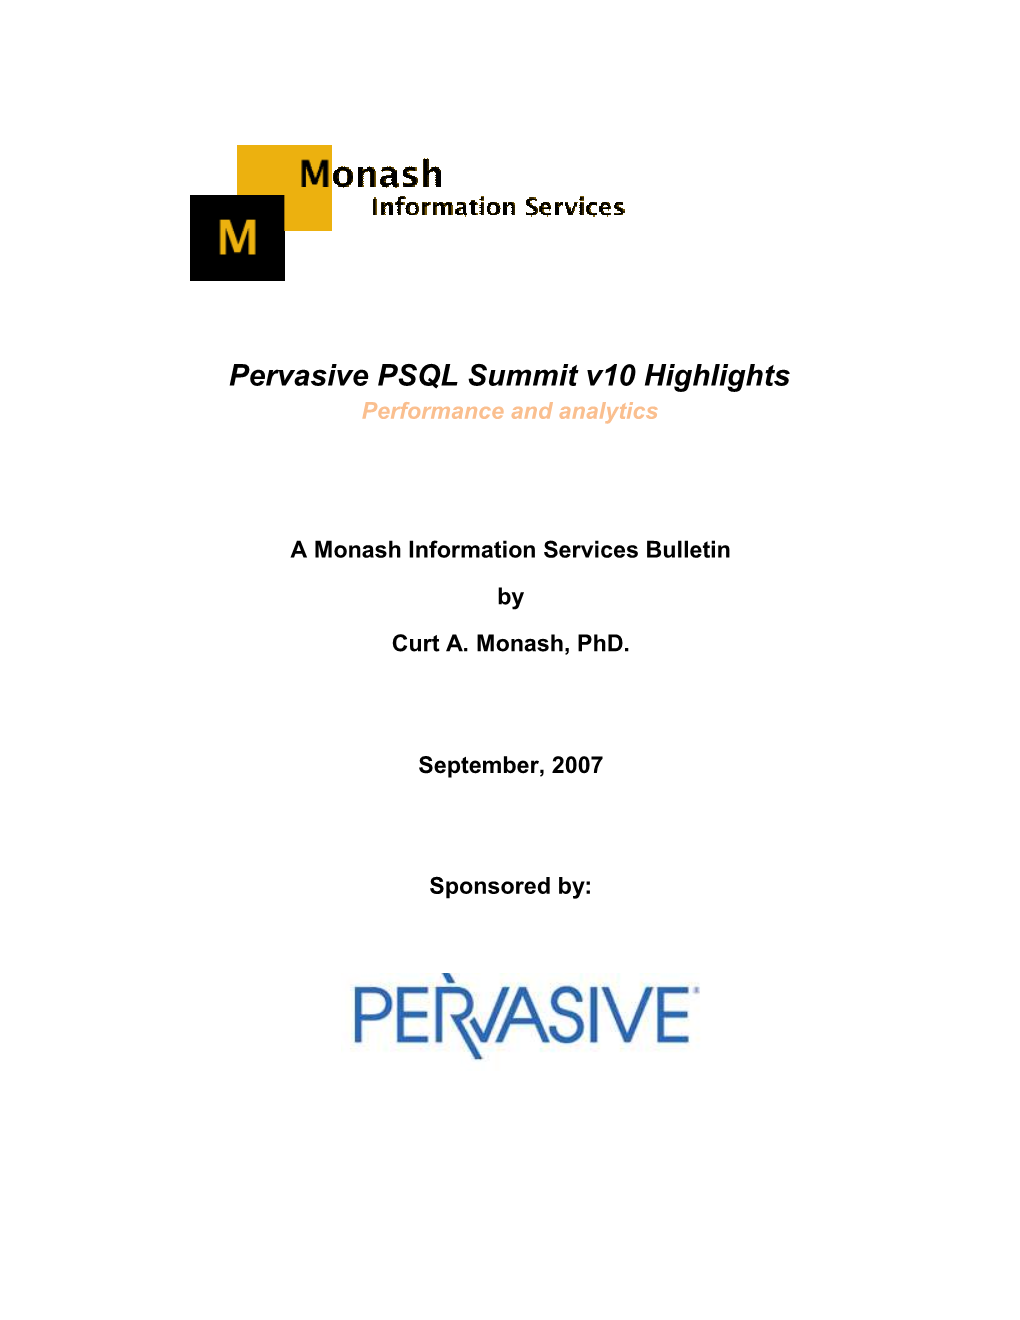 Pervasive PSQL Summit V10 Highlights Performance and Analytics